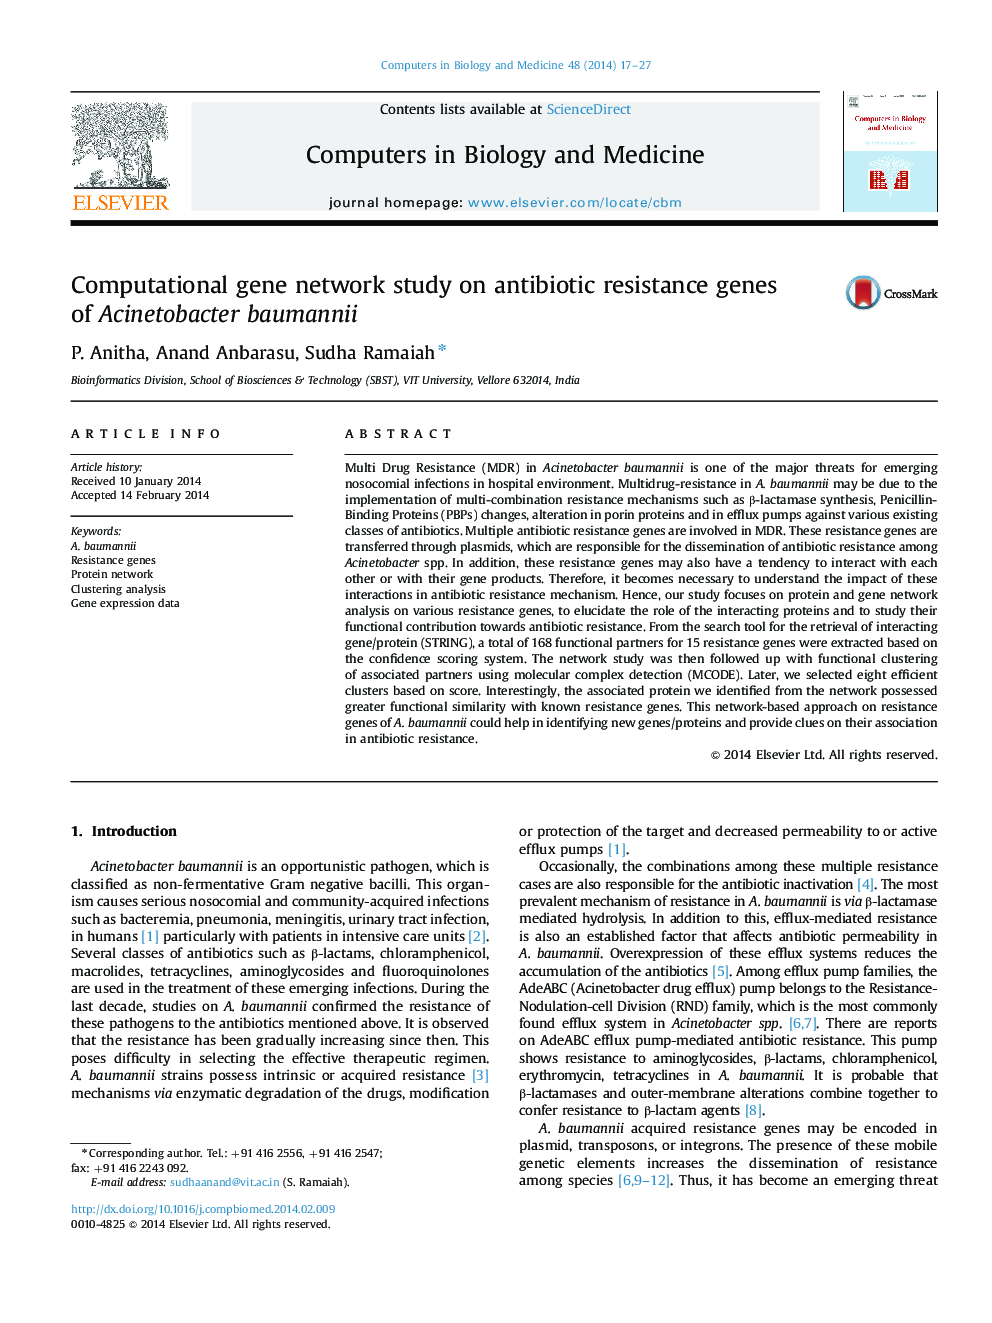 Computational gene network study on antibiotic resistance genes of Acinetobacter baumannii